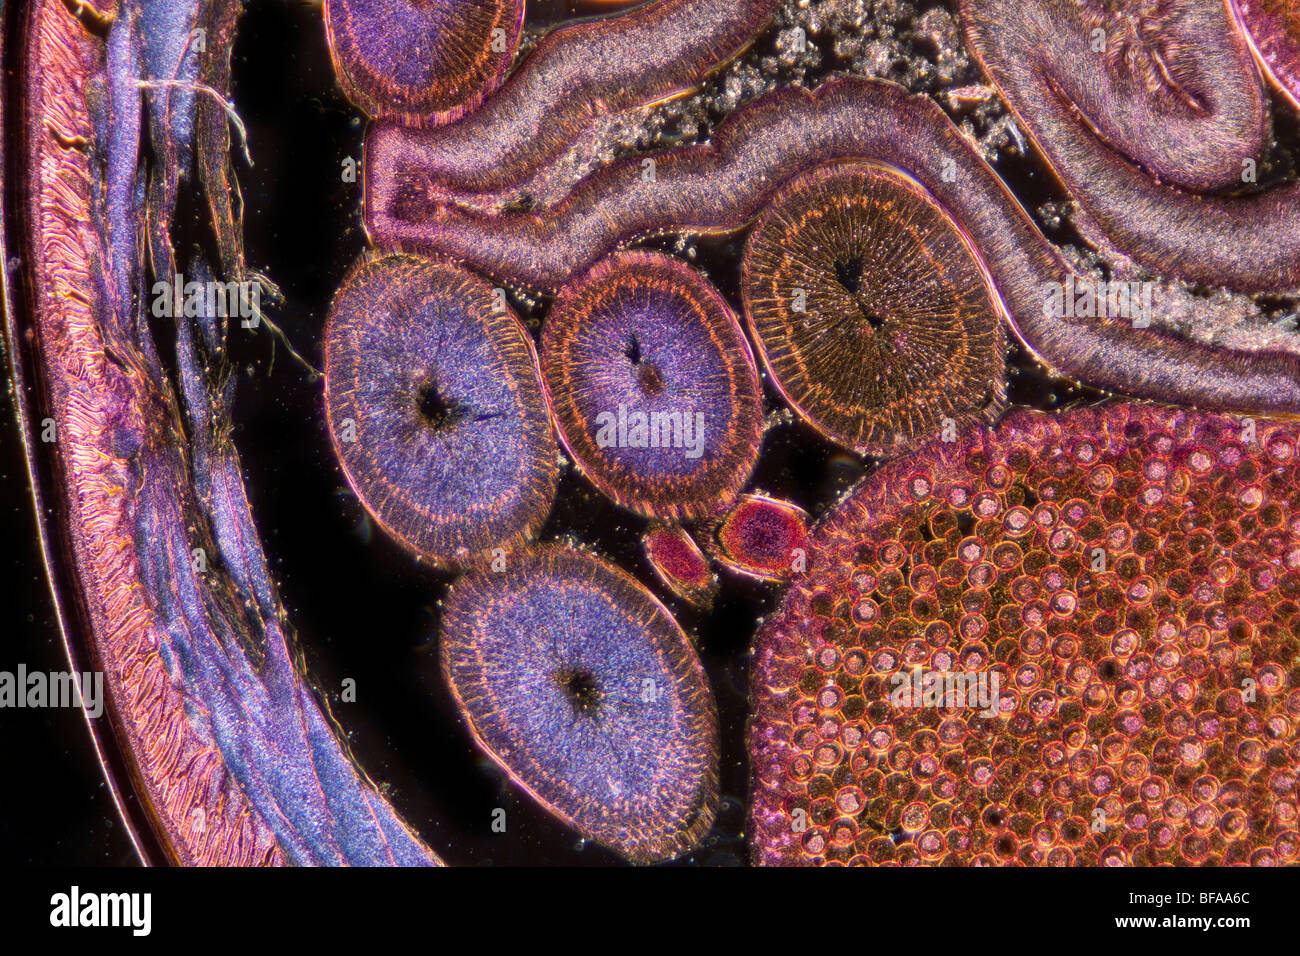 Nematoda Ascaris TS female, darkfield photomicrograph physiology detail Stock Photo